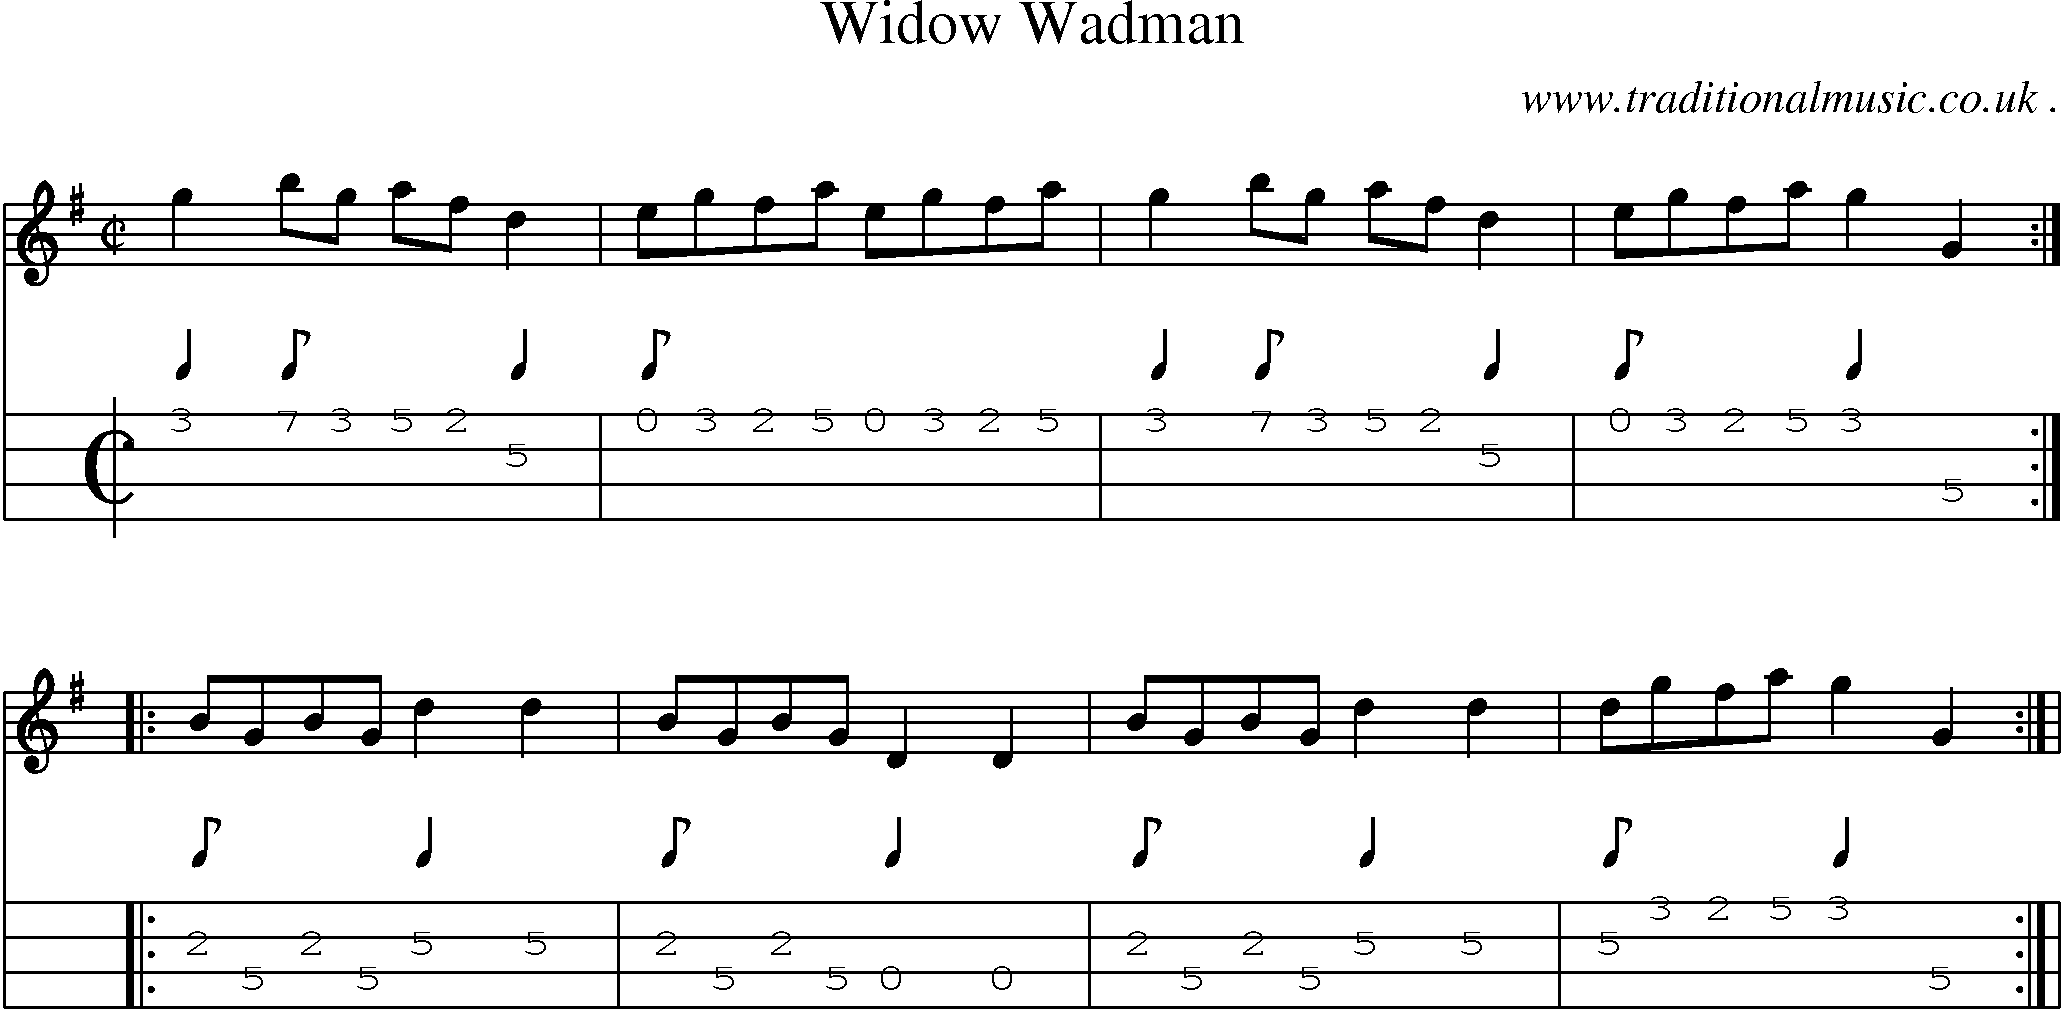 Sheet-Music and Mandolin Tabs for Widow Wadman